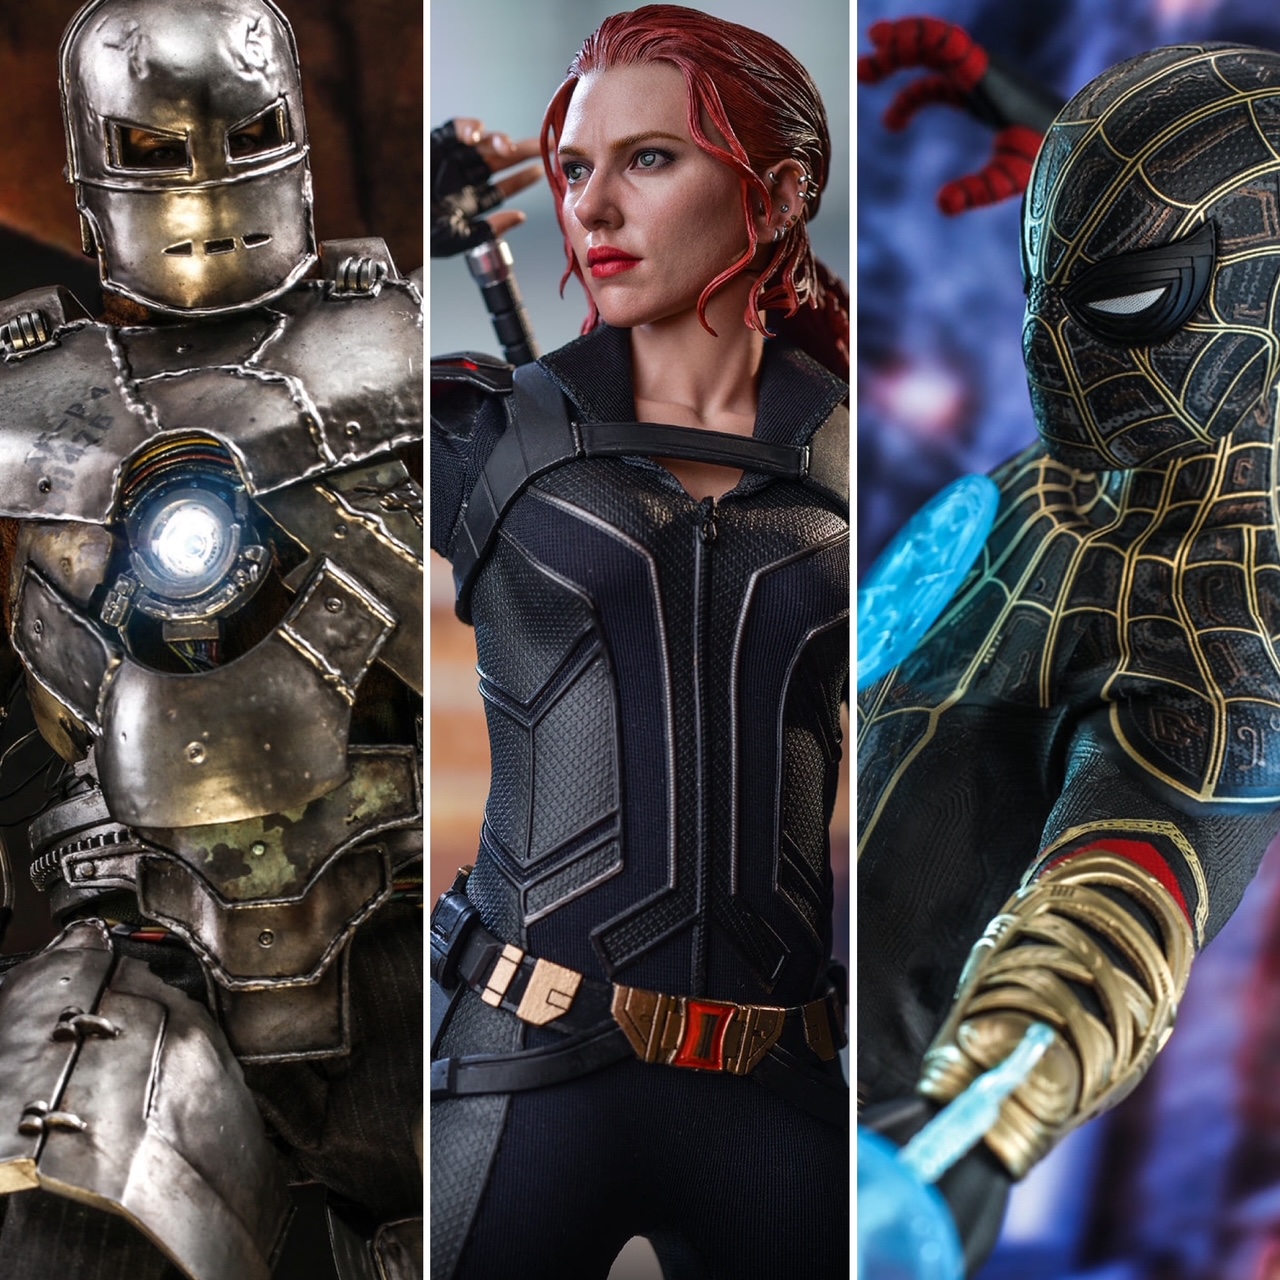 Hot Toys DIE-CAST Iron Man Mark I, Black Widow & Black/Gold Spider-Man 1/6  Figures! - Marvel Toy News